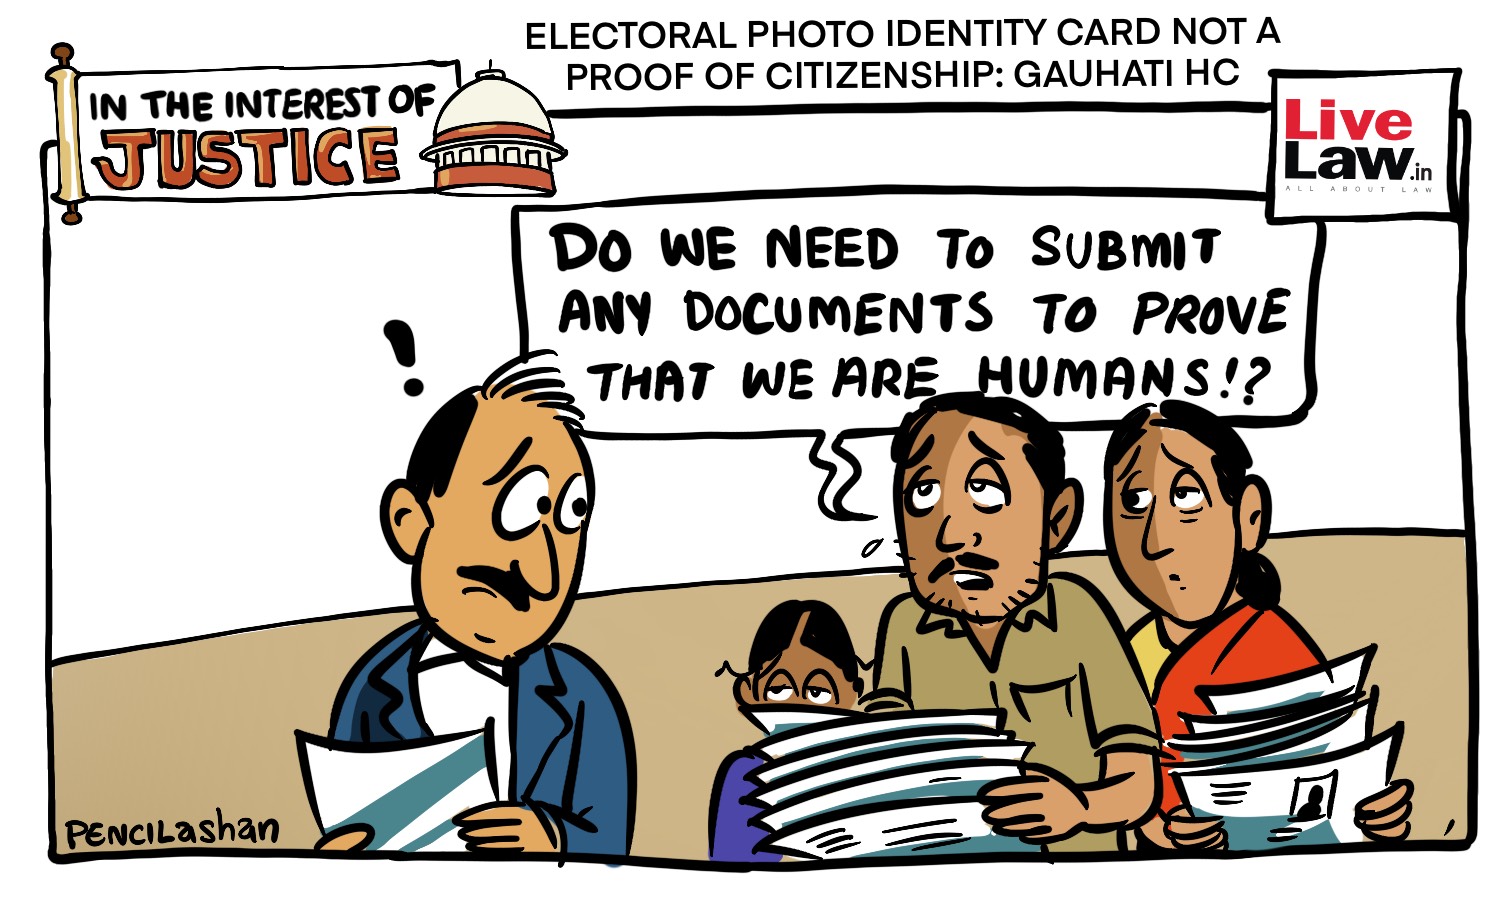 Electoral Photo Identity Card Not A Proof Of Citizenship: Gauhati HC [Cartoon]